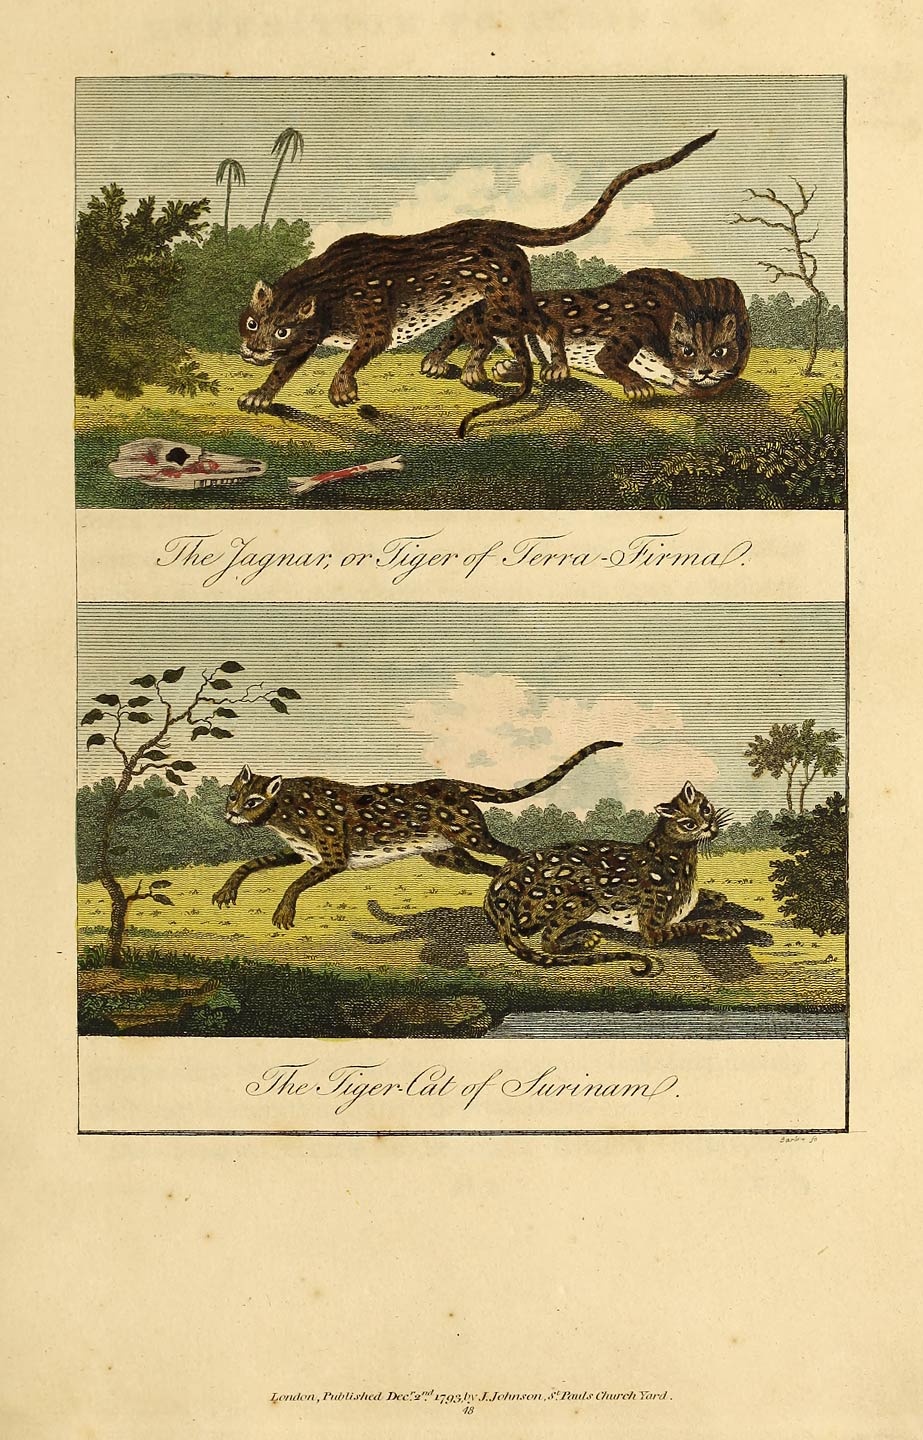 The Jaguar, or Tiger of Terra-Firma.